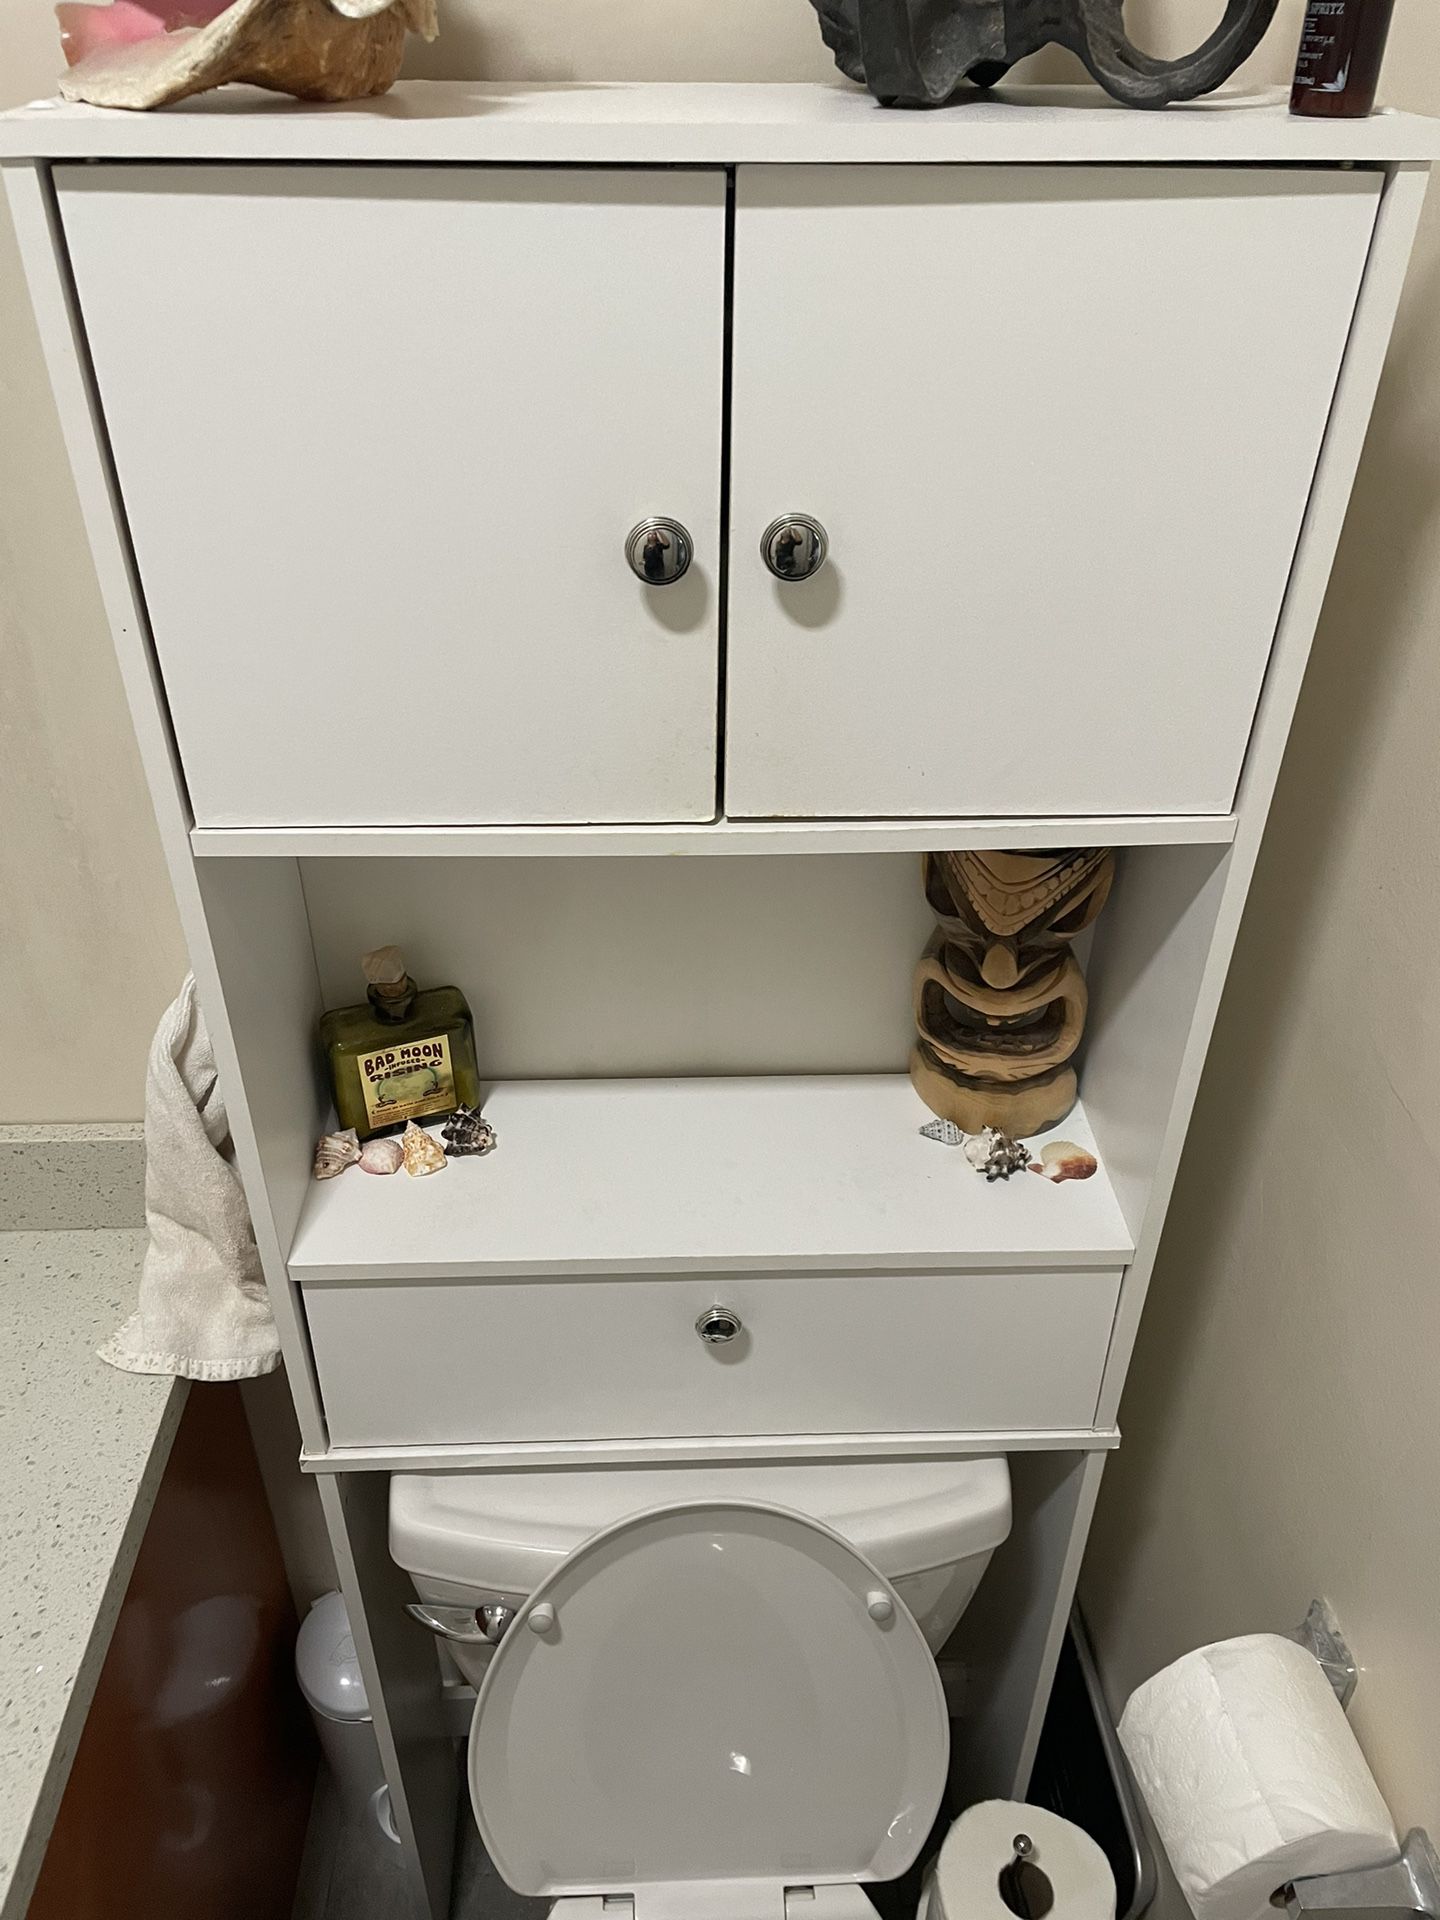 Other The Toilet Bathroom Storage